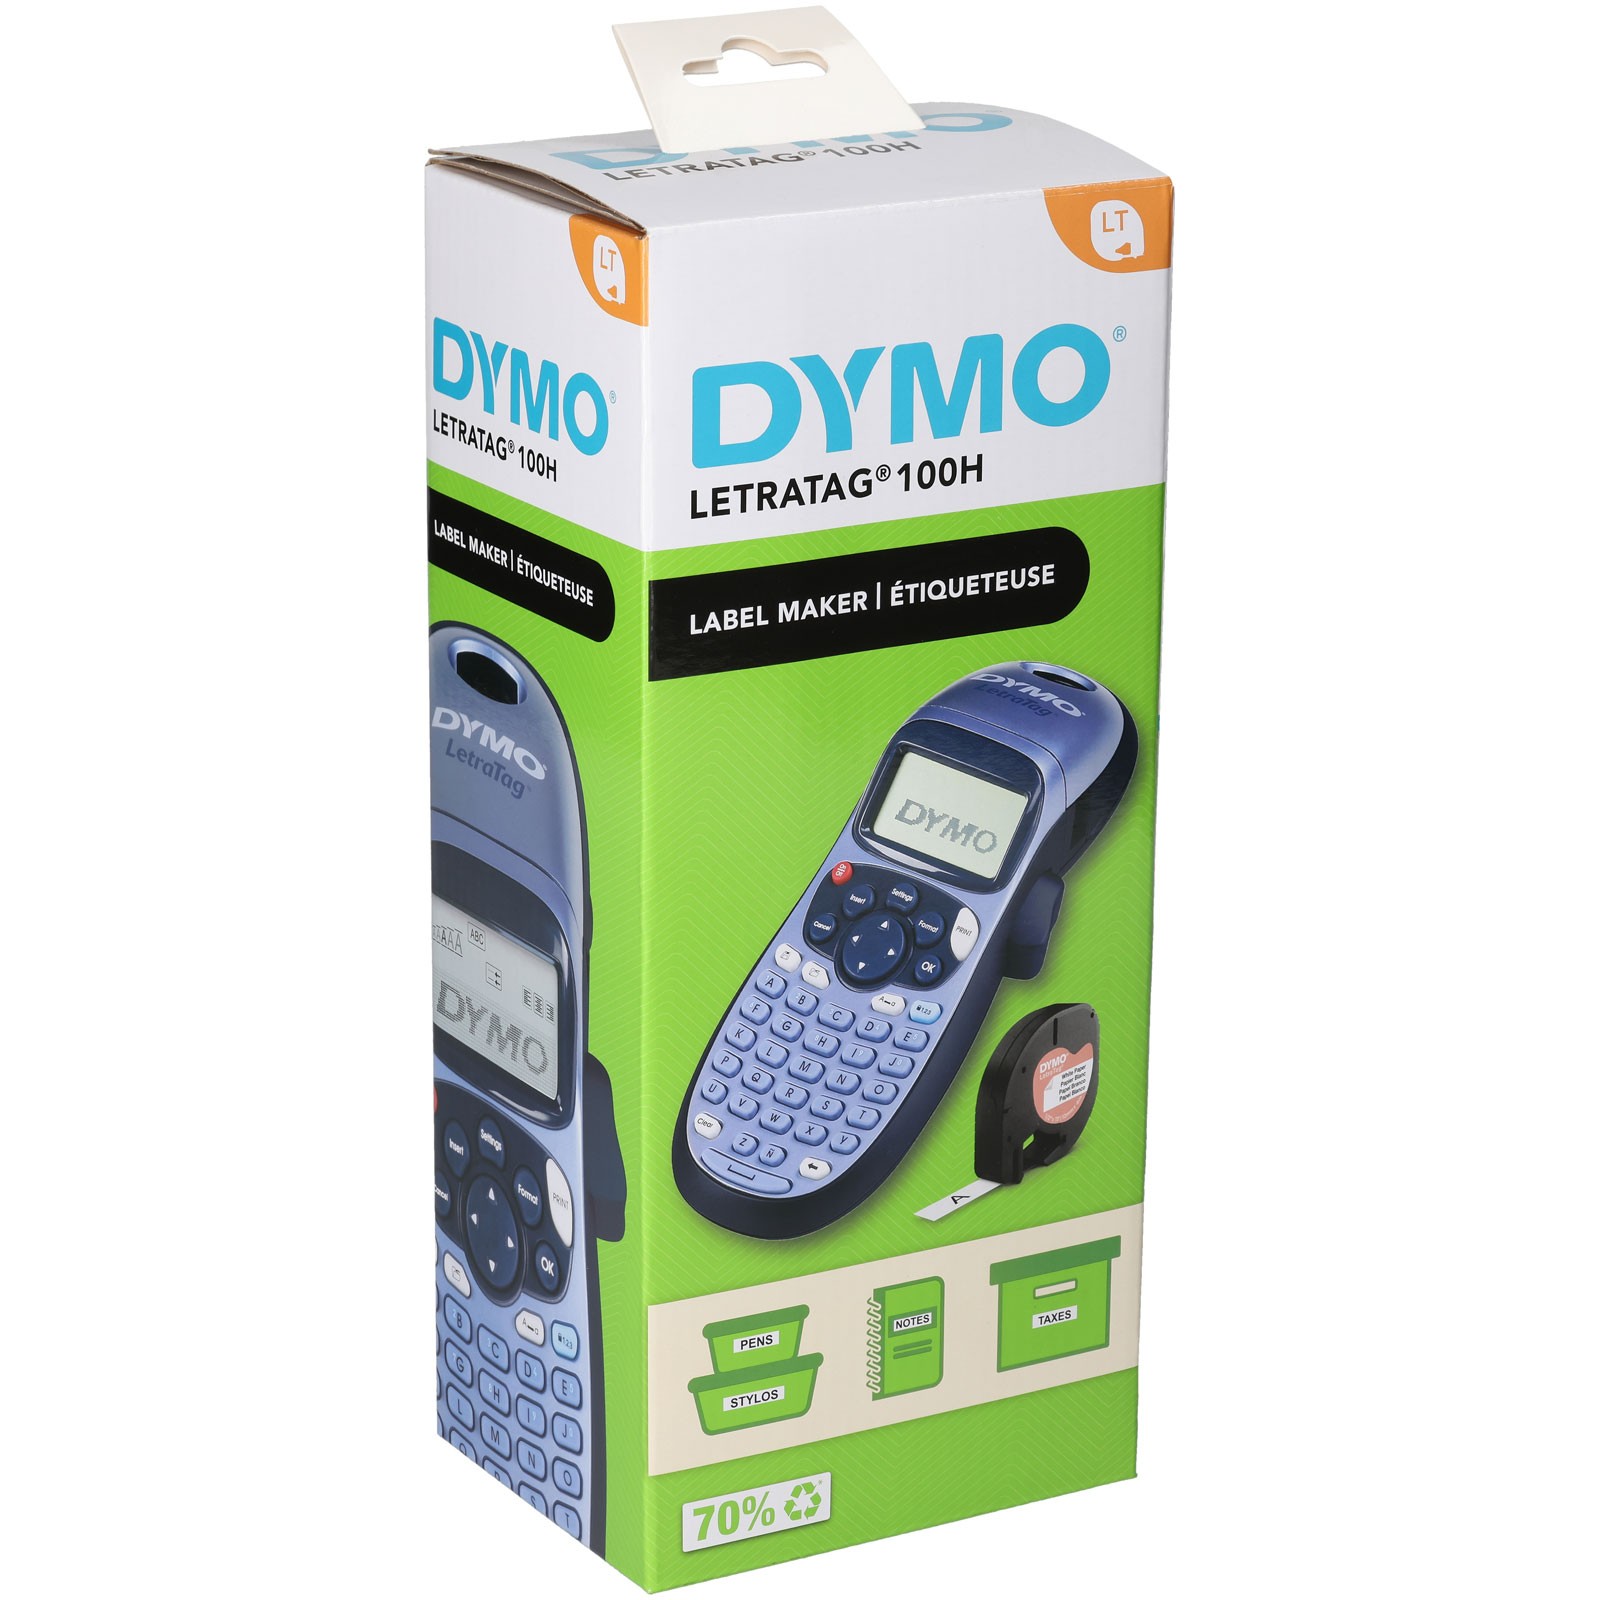 DYMO 2174576 LetraTag 100H Handheld Portable Label Maker, Blue